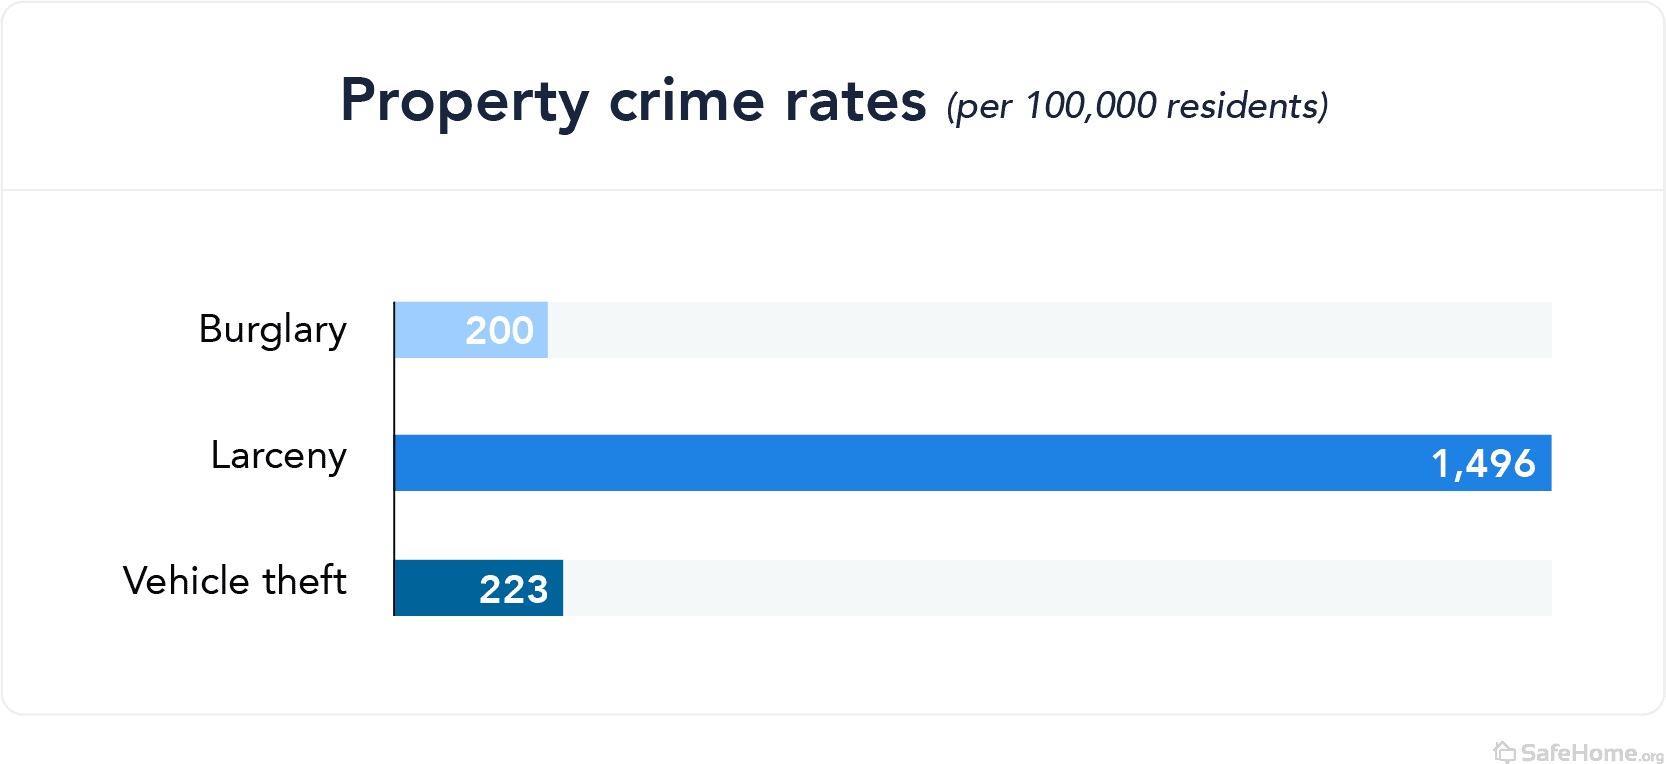 Montana Property Crime Rates